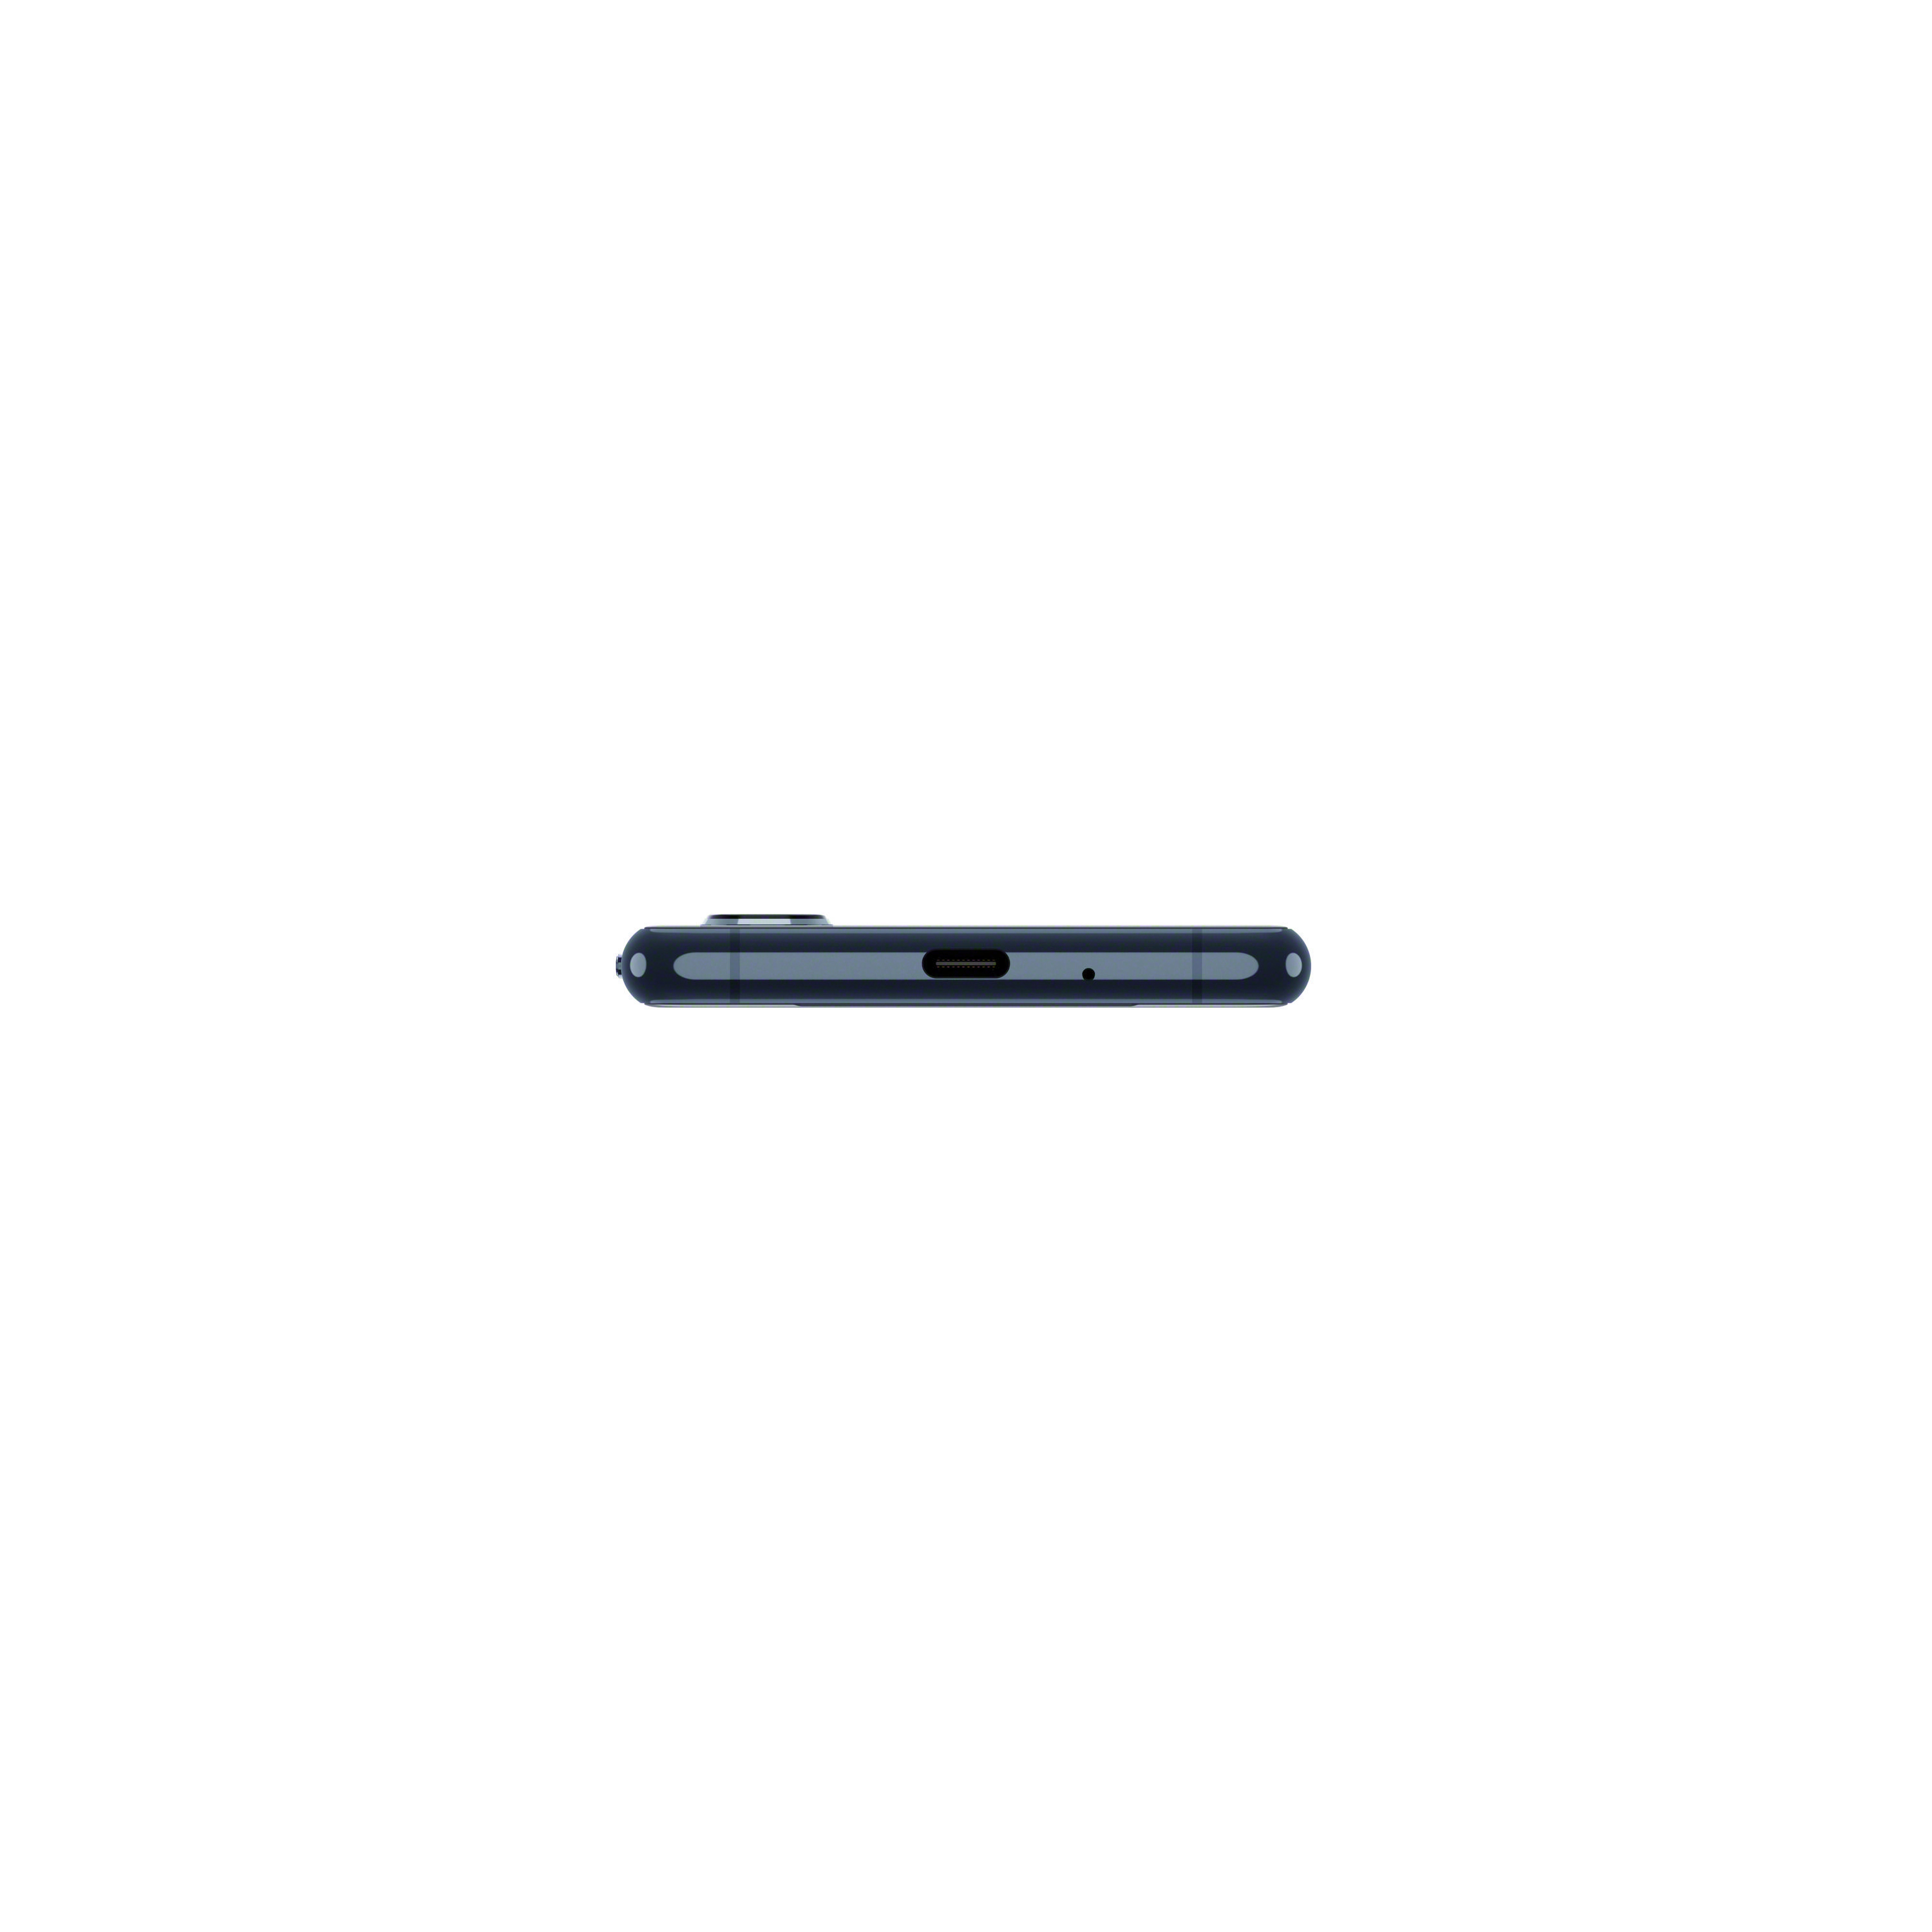 Blau Dual II GB SIM Xperia SONY 21:9 5G 128 Display 5